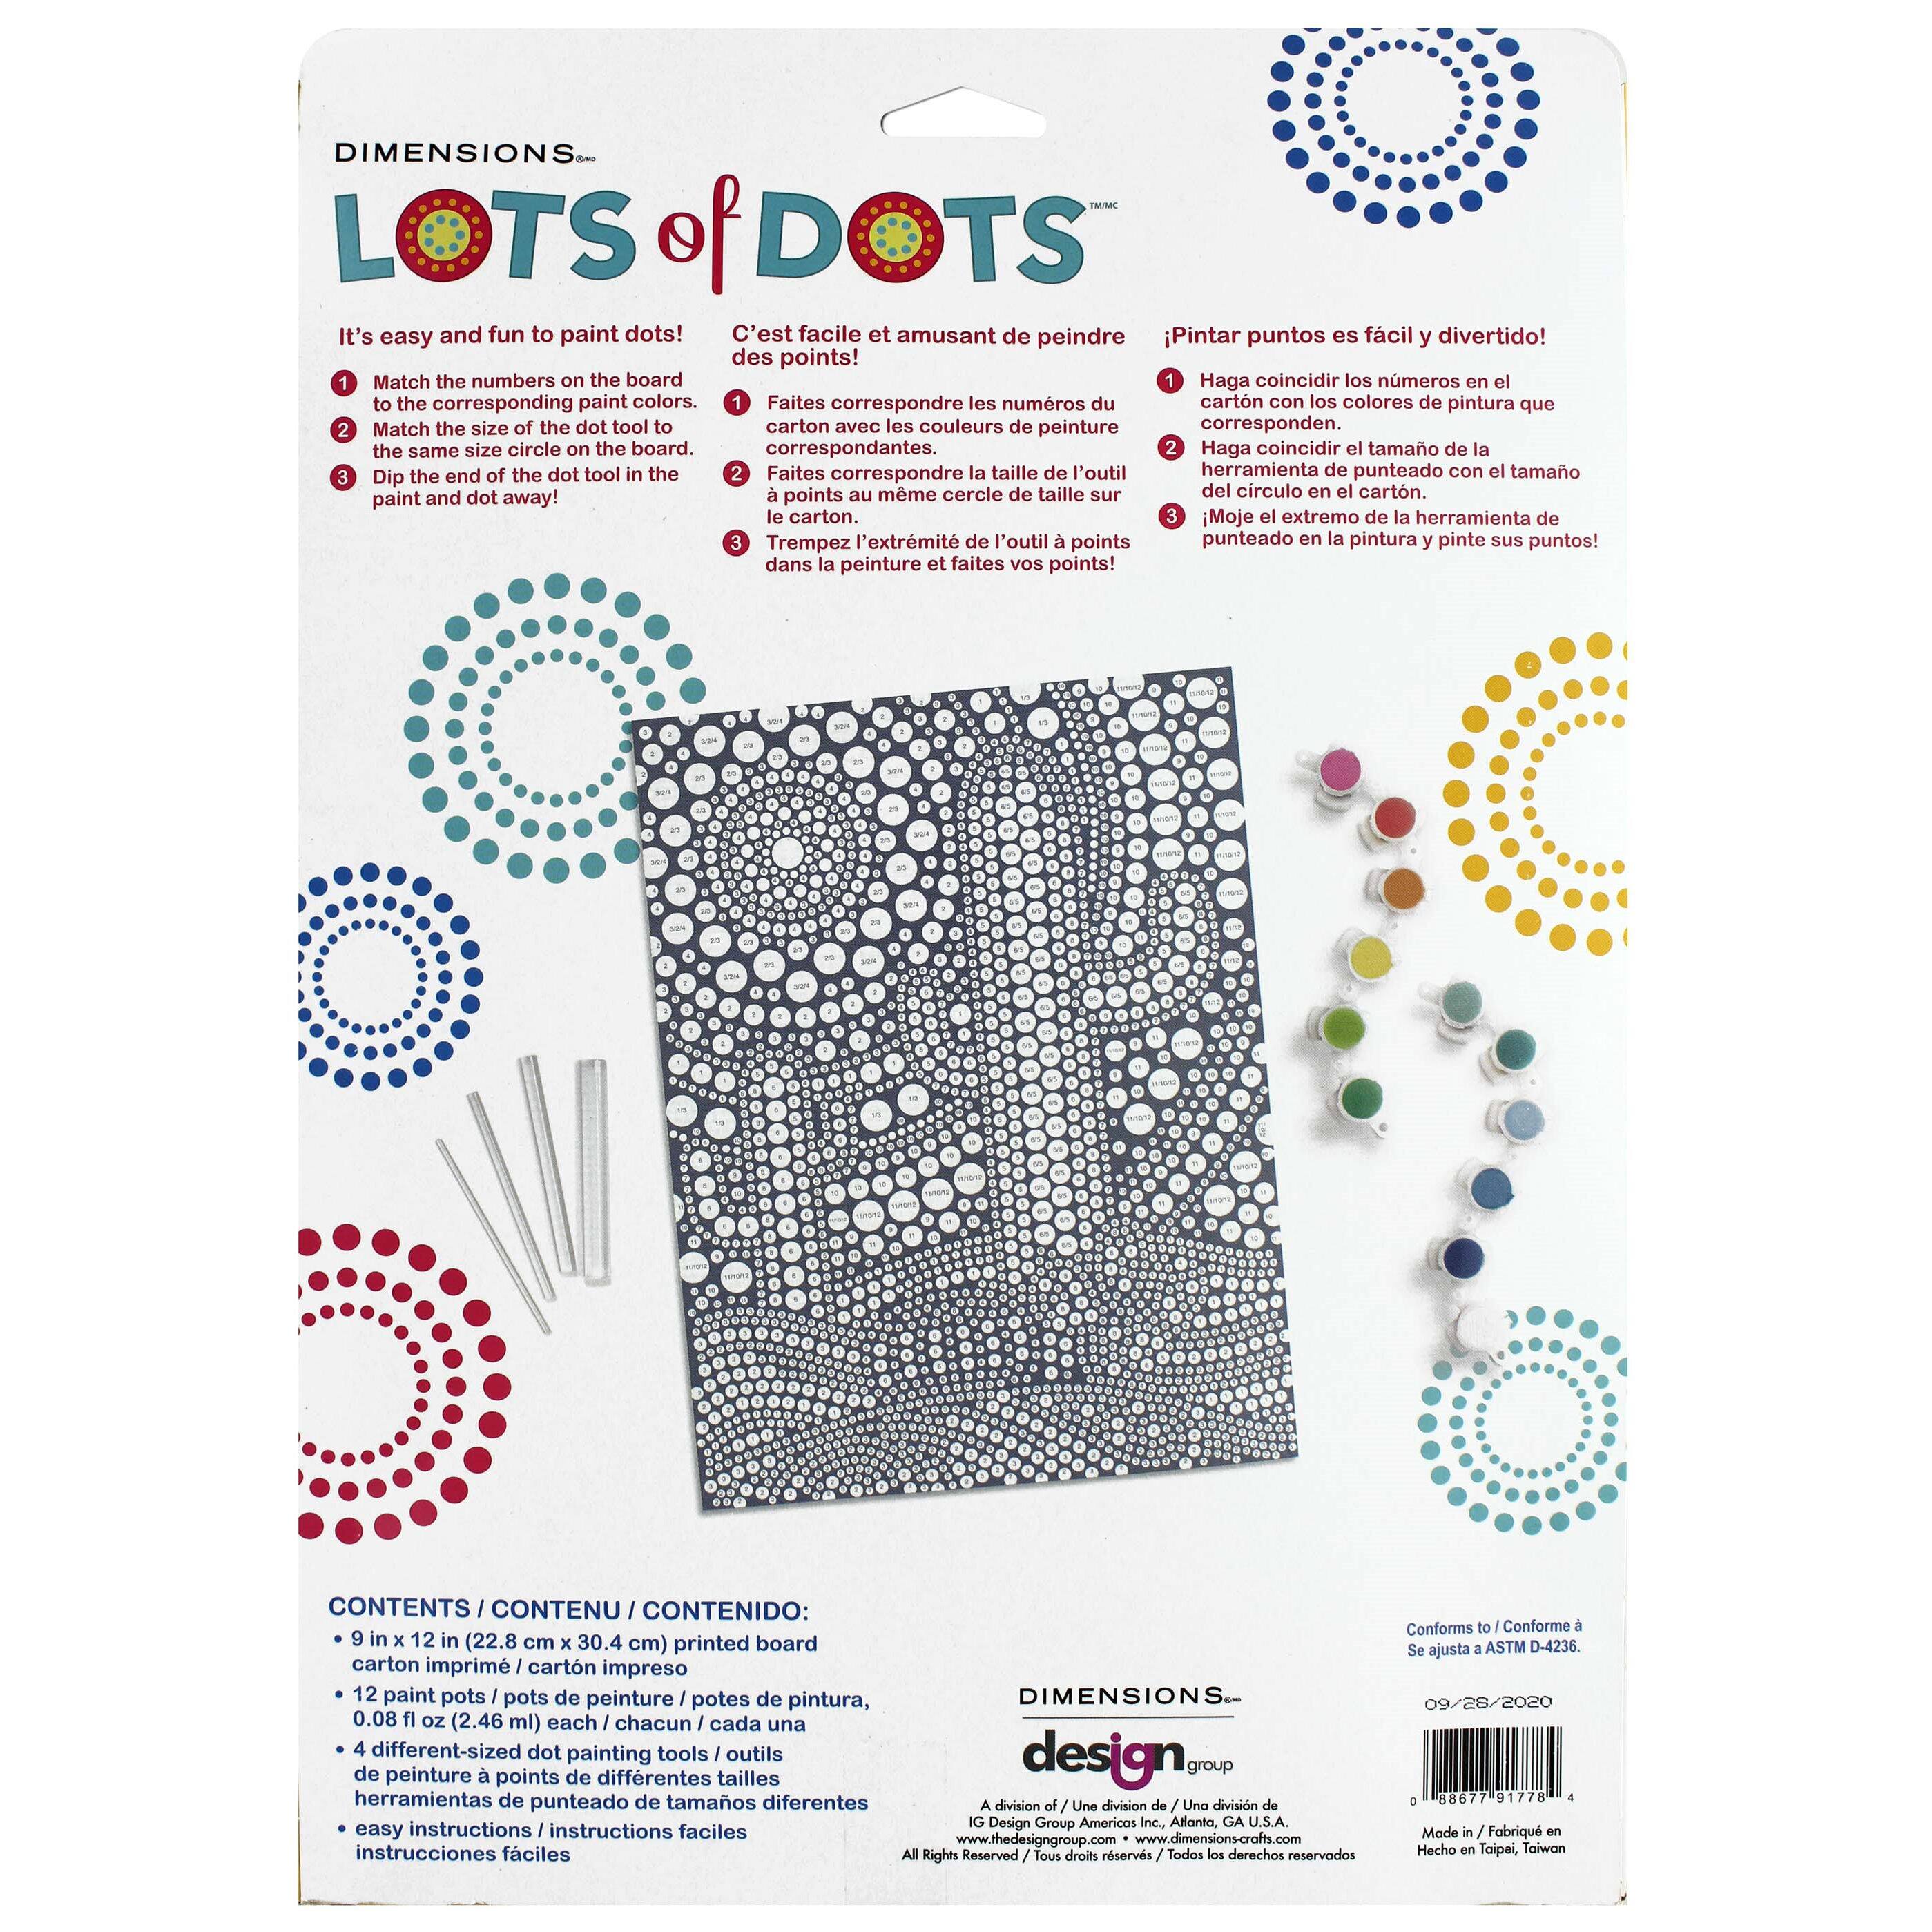 Dimensions® Lots Of Dots™ Dot Painting Kit, Girl